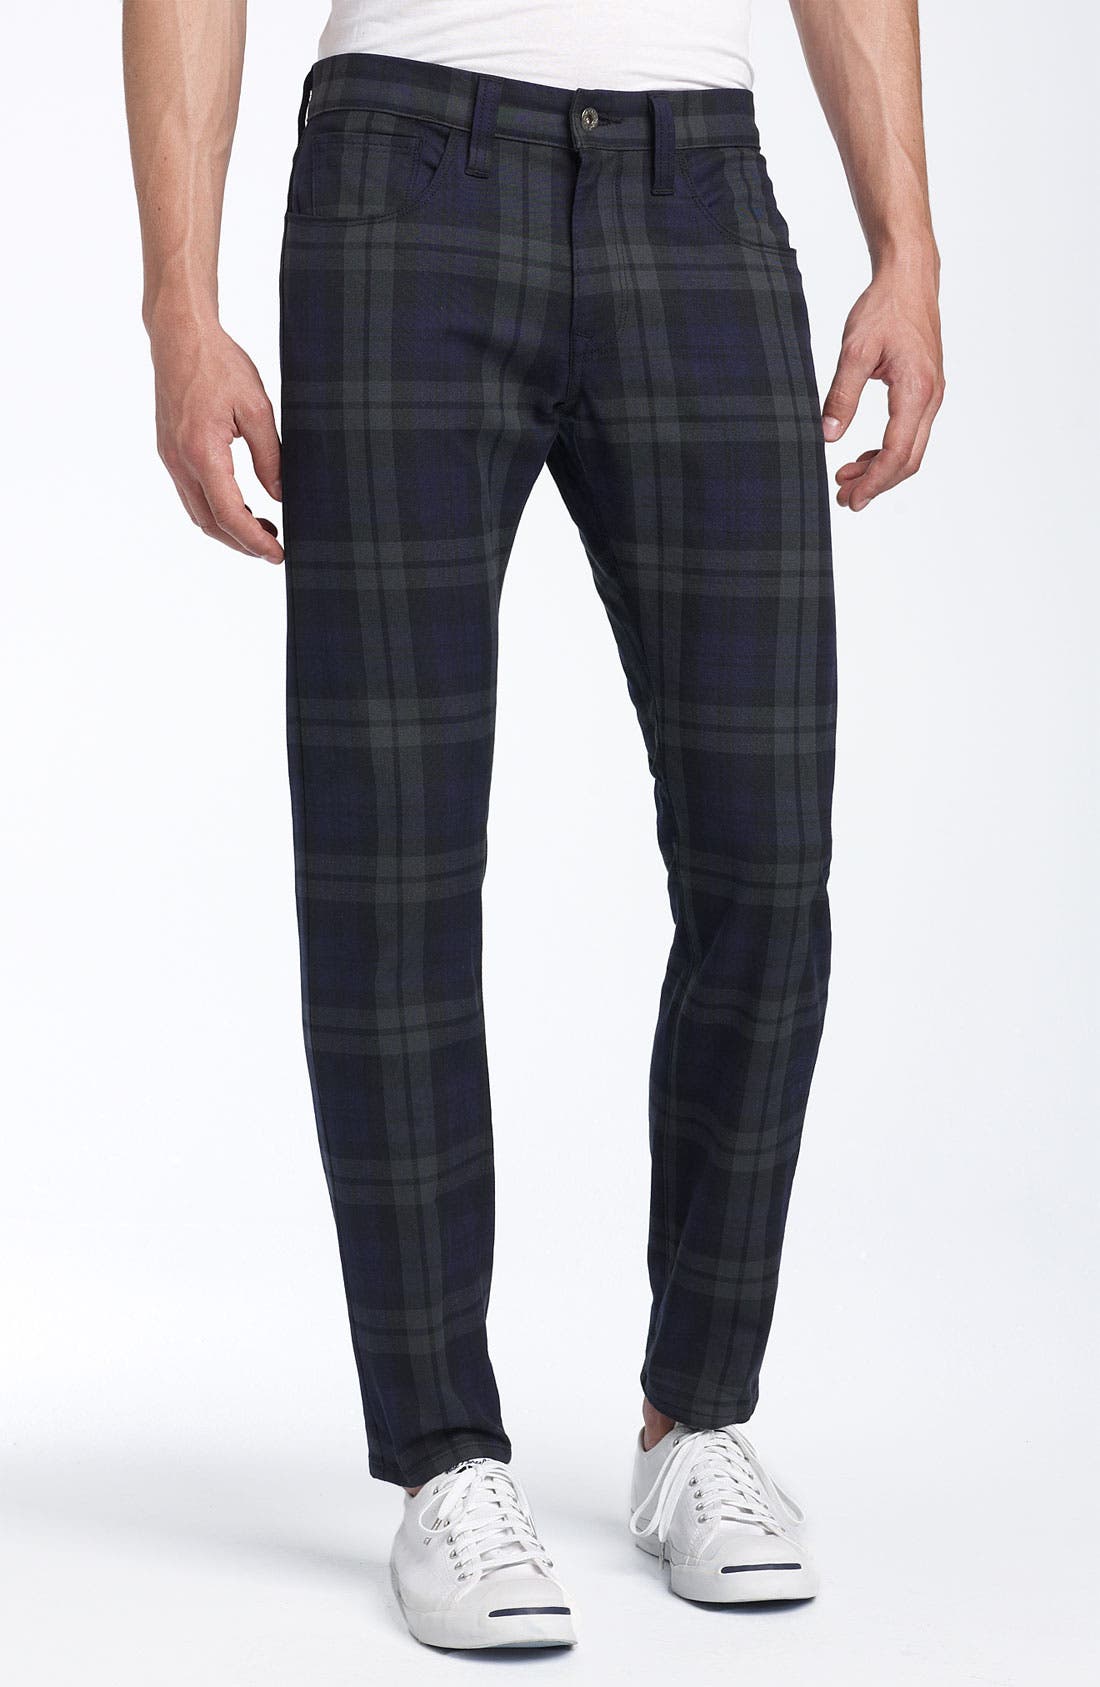 Matchstick' Skinny Plaid Pants | Nordstrom